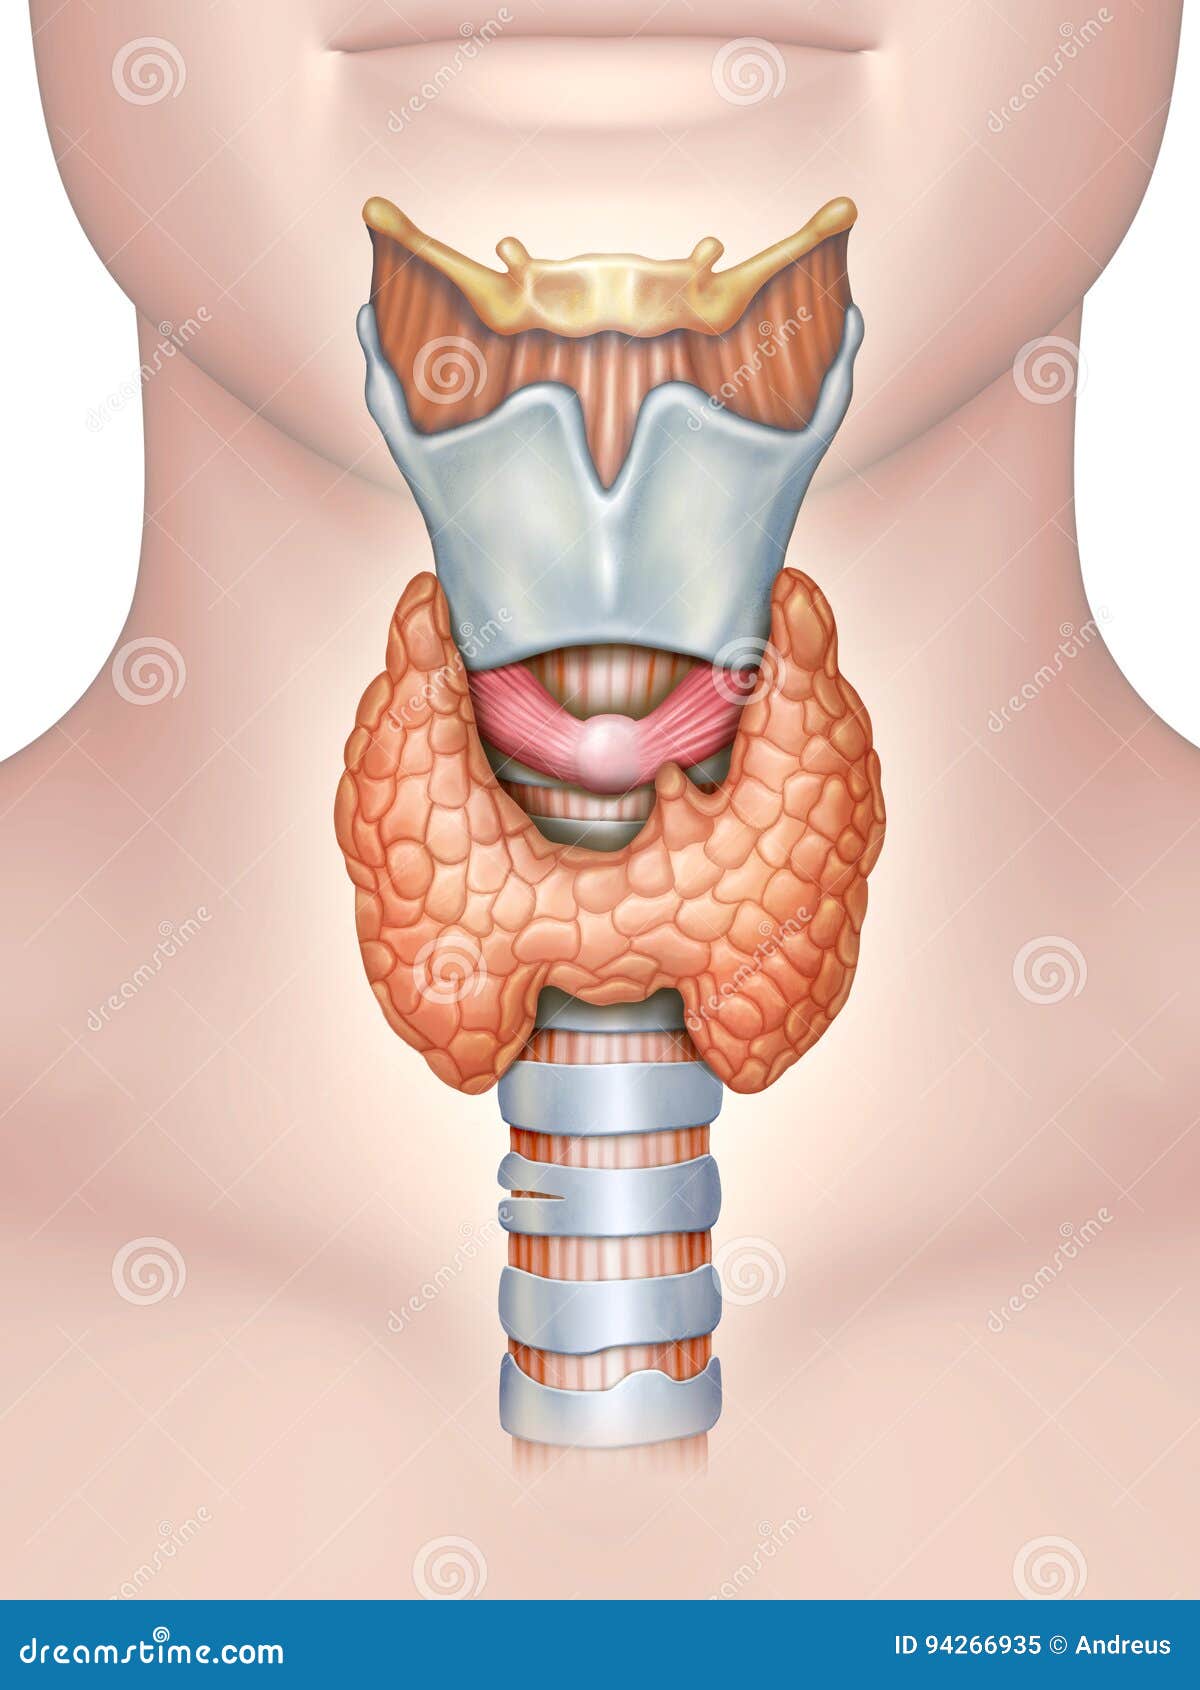 anatomy of the thyroid gland